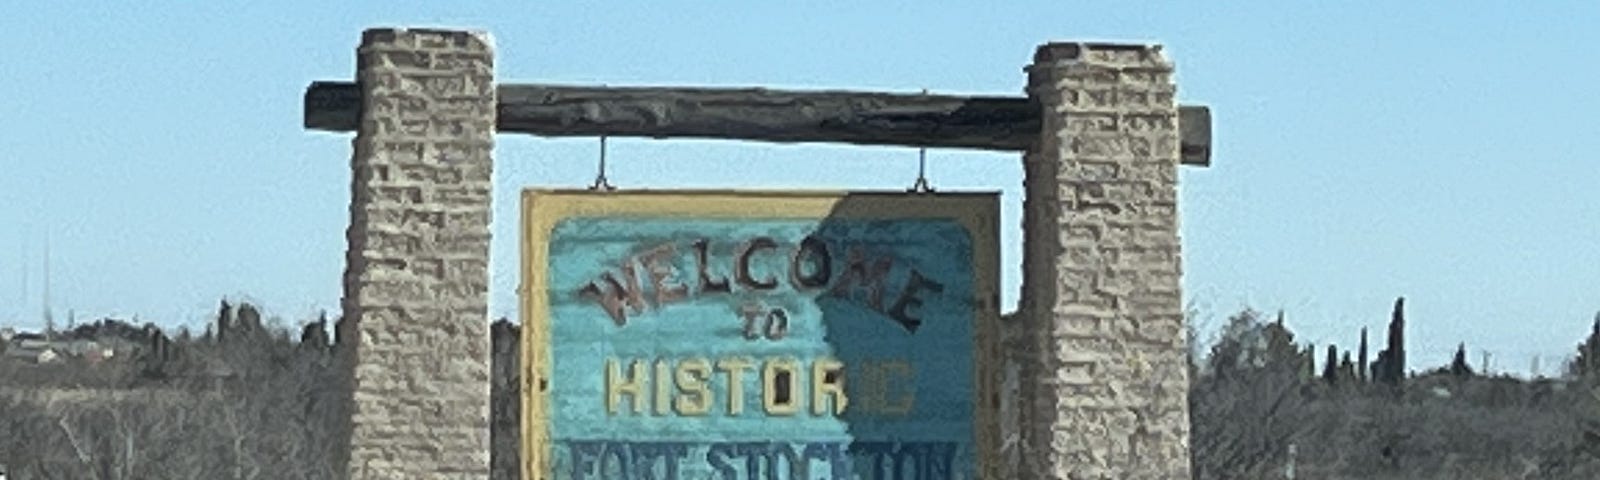 Historic Fort Stockton sign